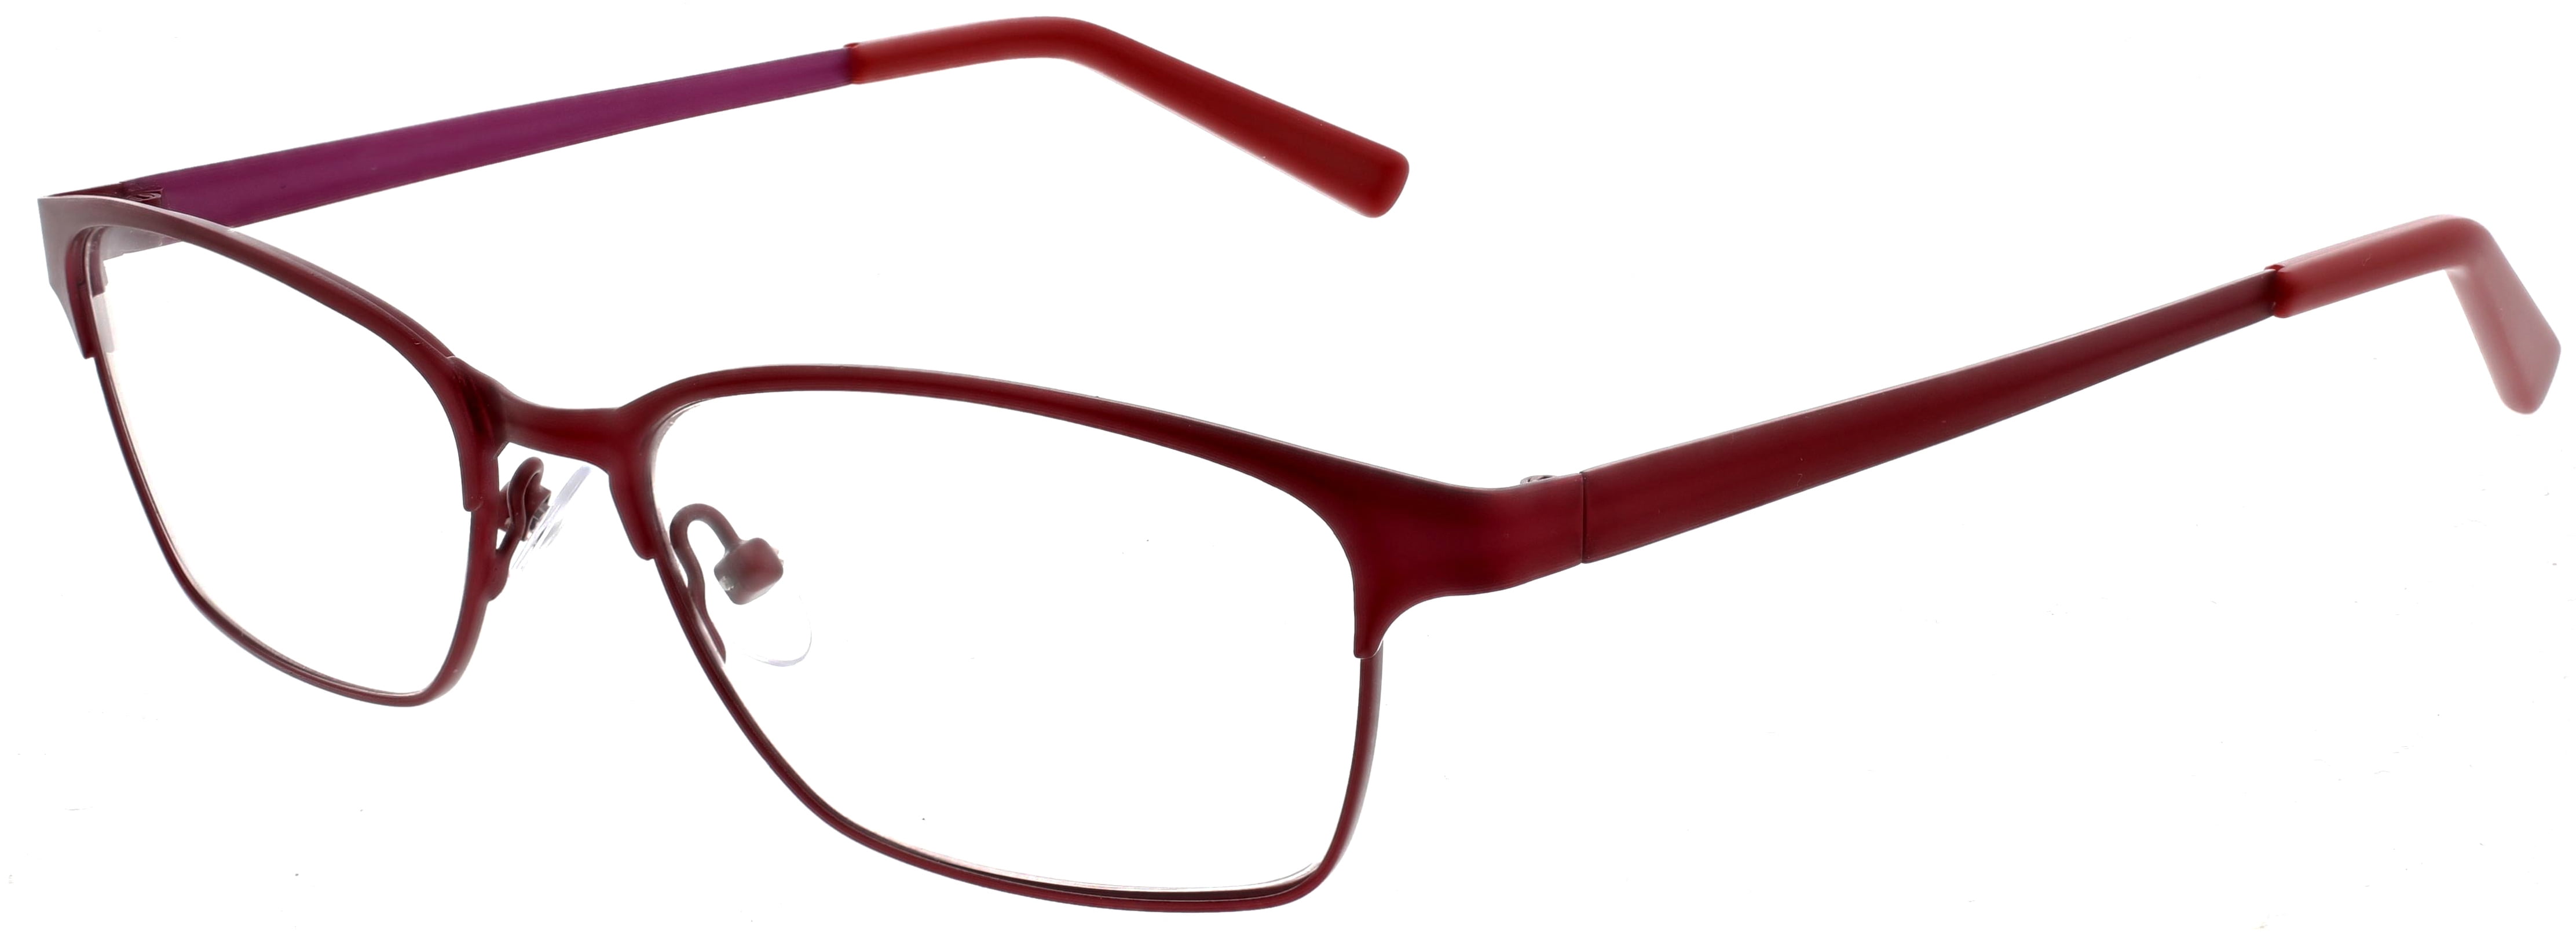 TiFlex Women's Rectangular Eyeglasses, TFL2103, Wine, 52-16-135, with Case